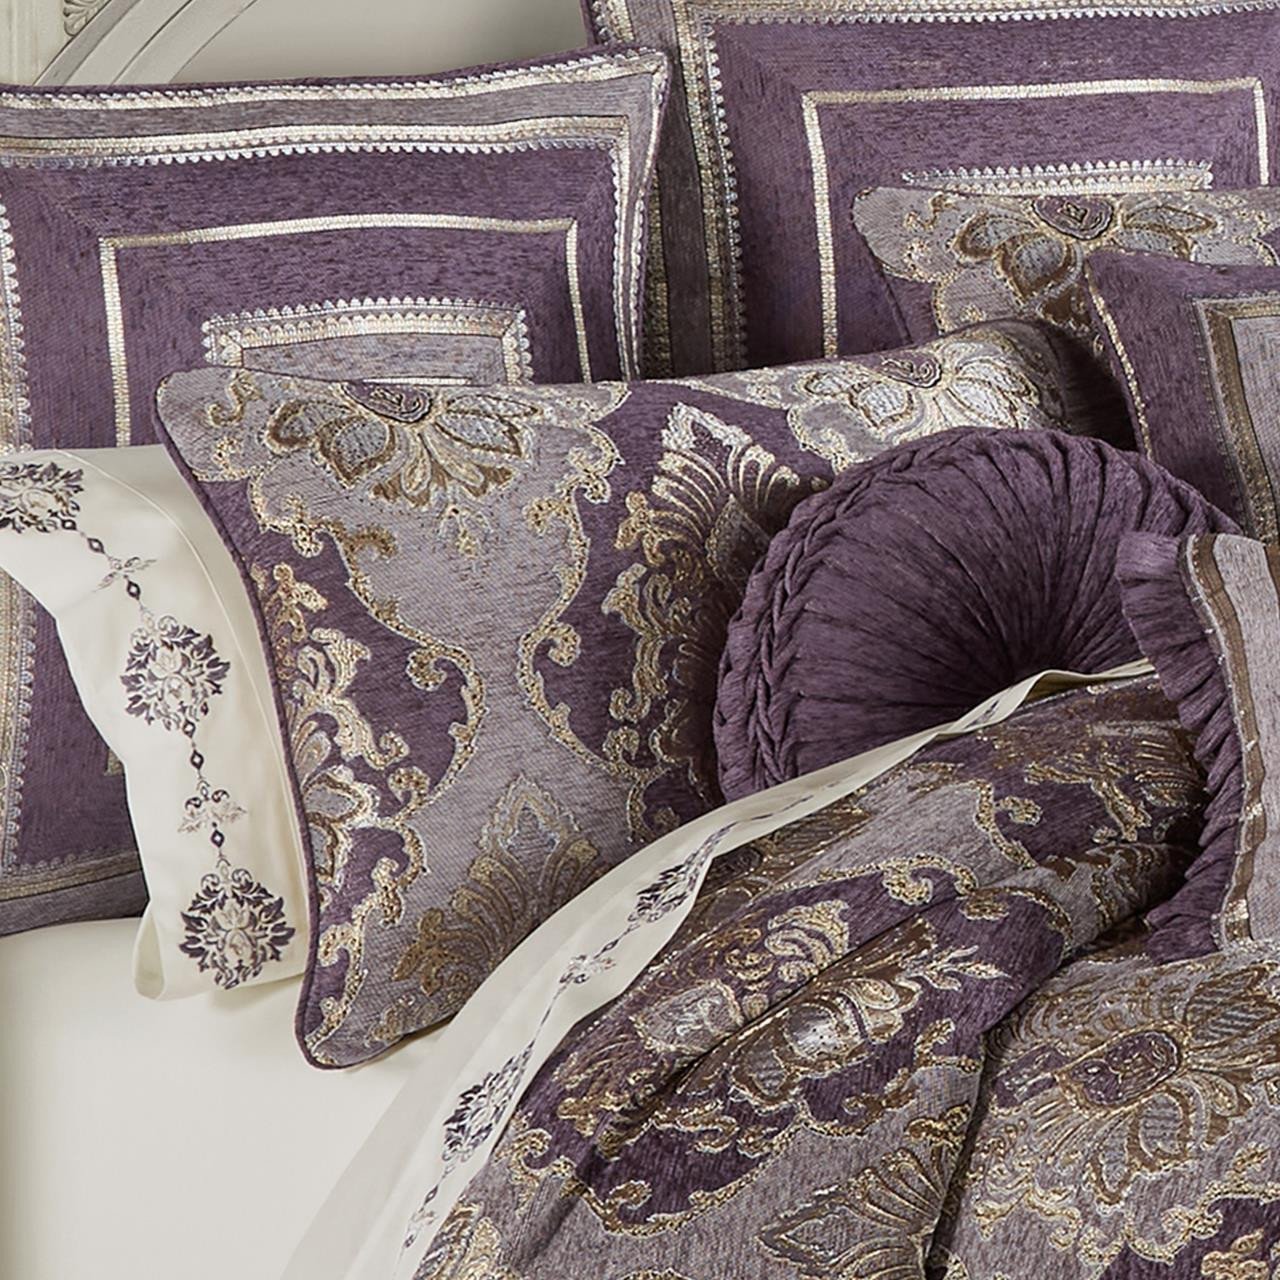 Dominique Lavender Bedding Collection -